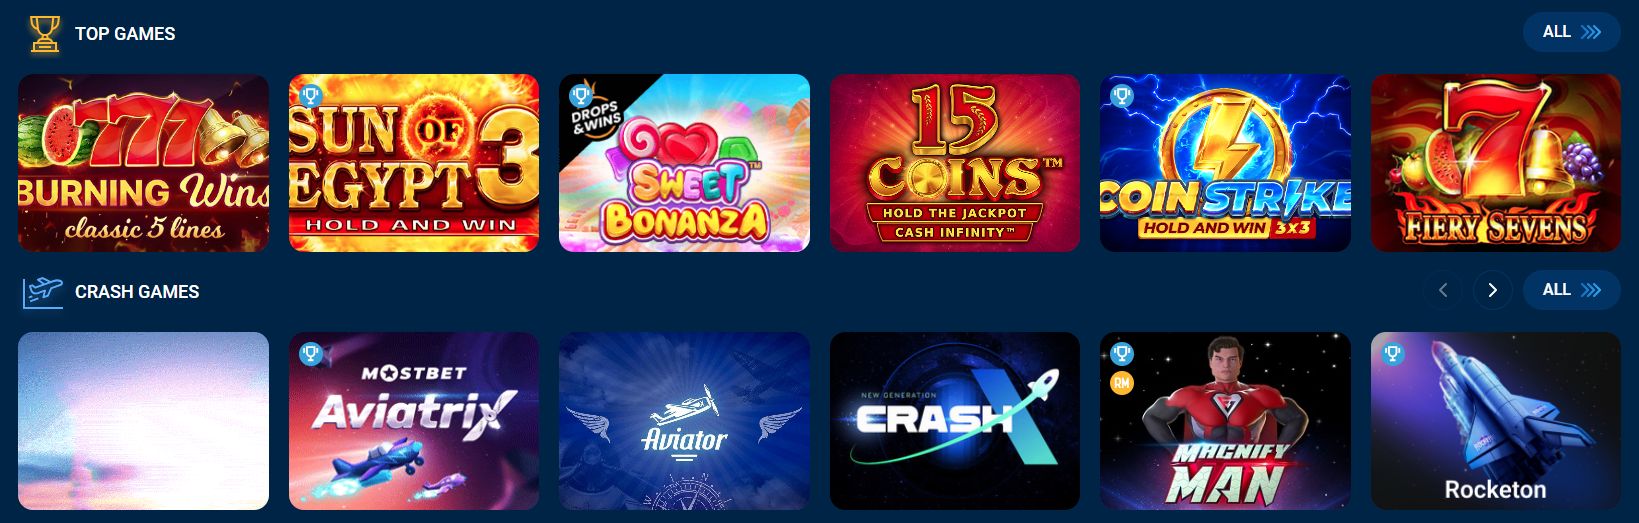 Types of Casino Games